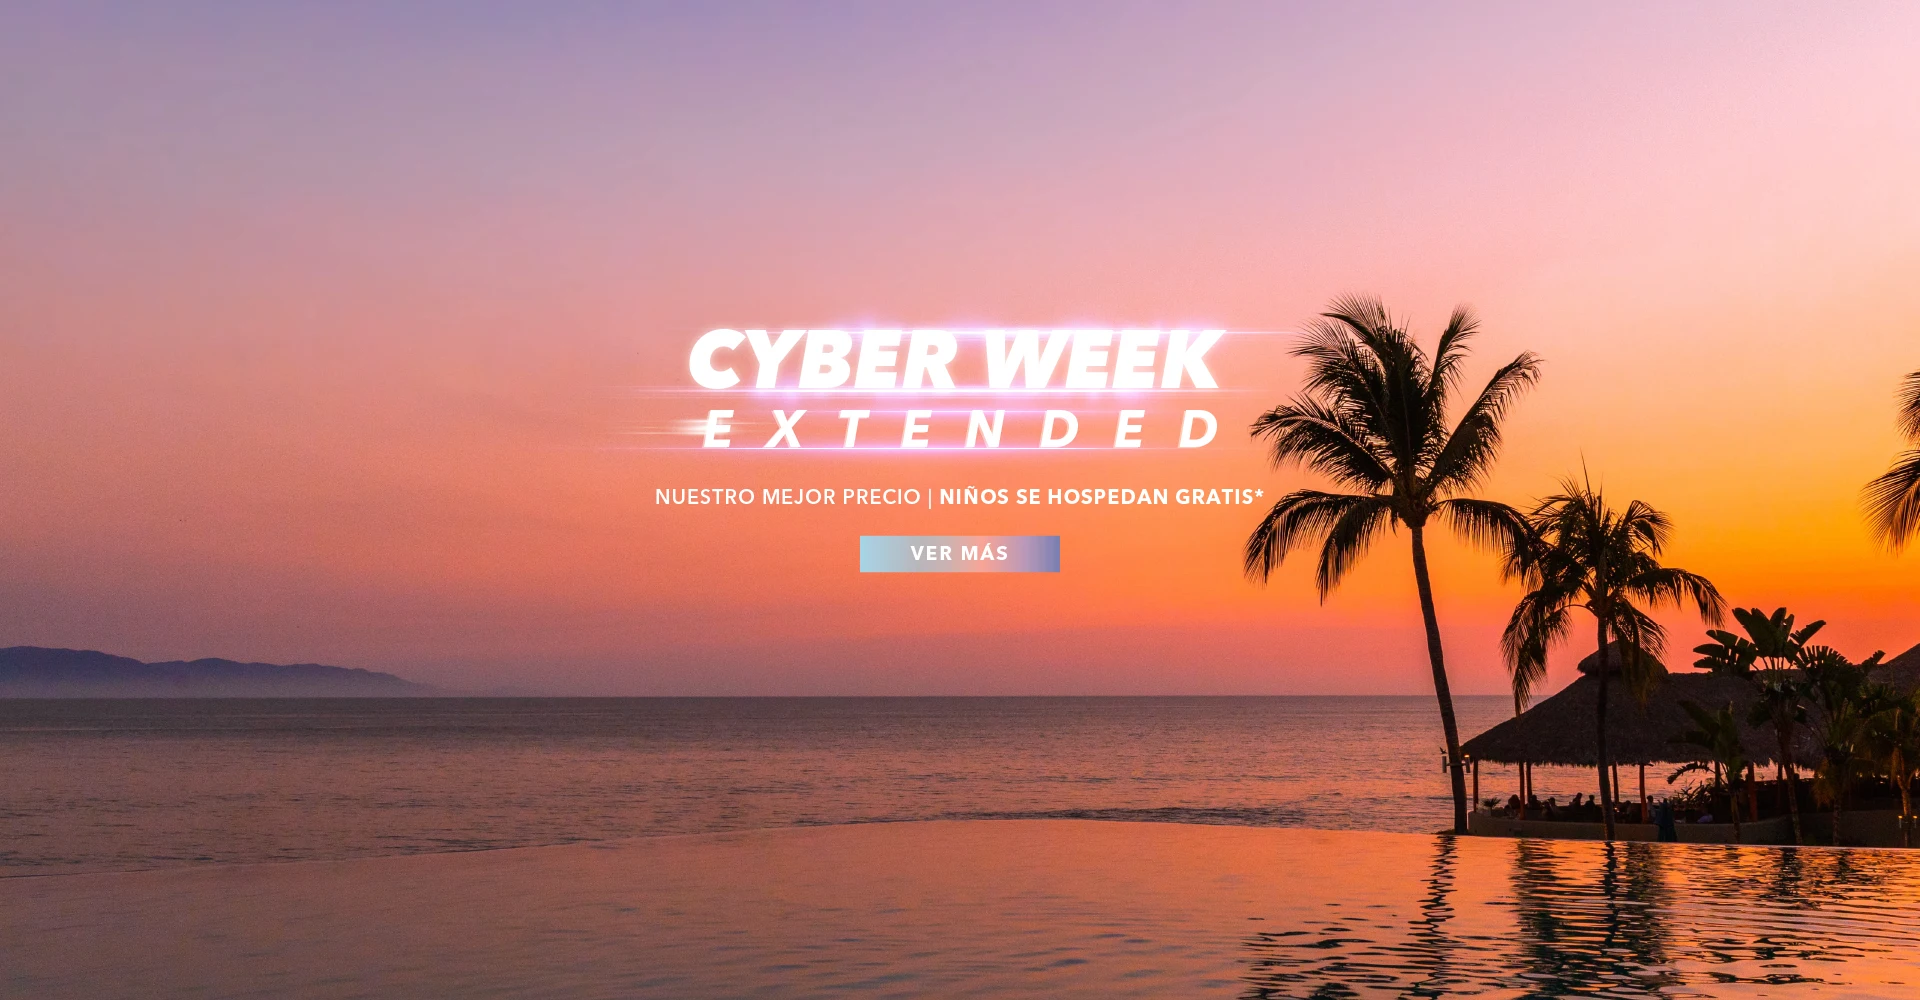 Cyber week extended Armony Luxury Resort & Spa en Punta de Mita